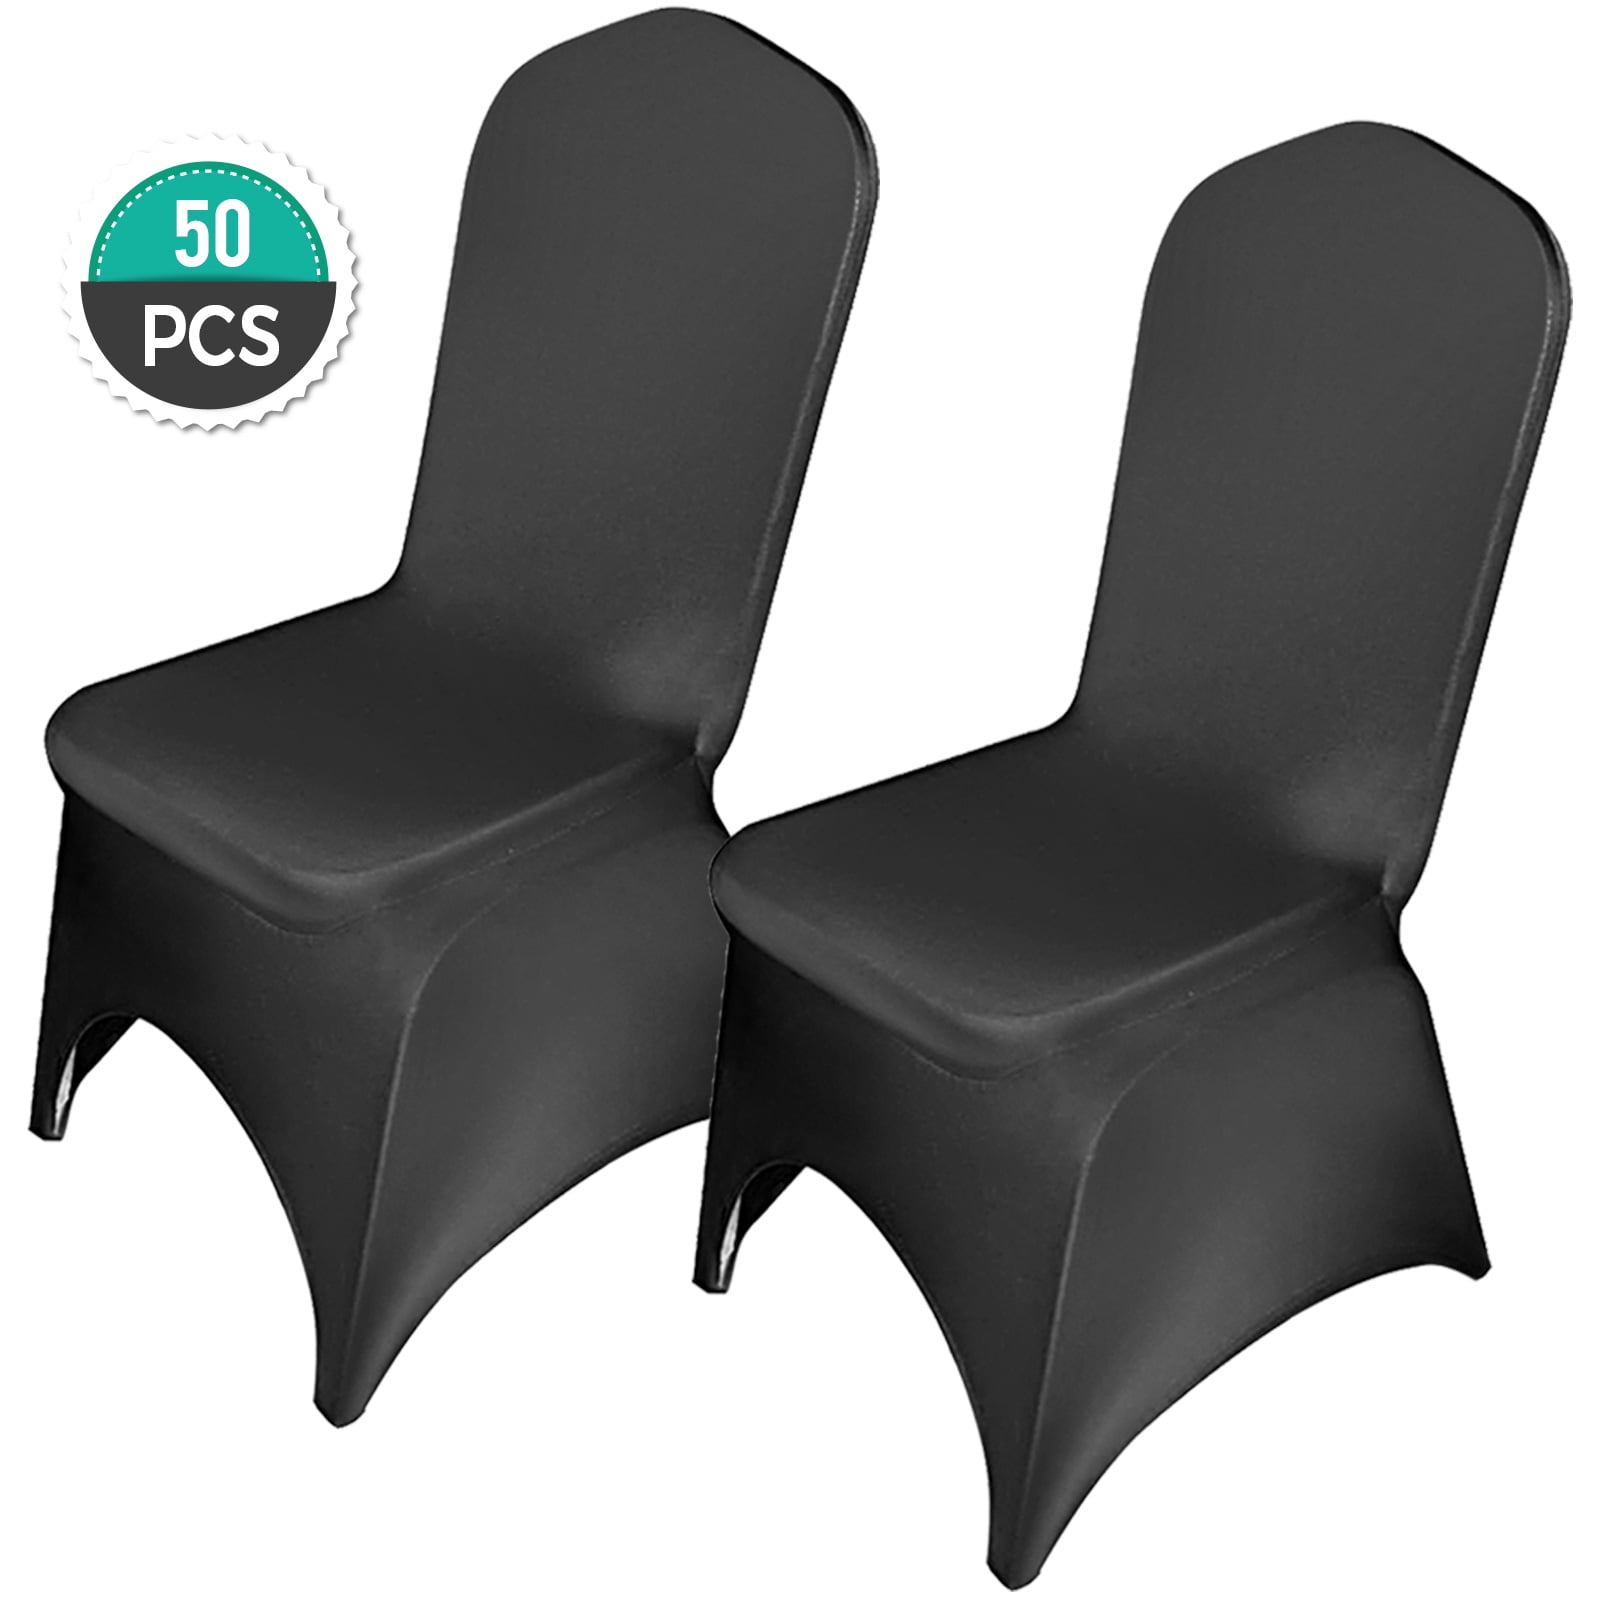 VEVORbrand 50PCS Chair Covers Polyester Spandex Stretchy Slipcover